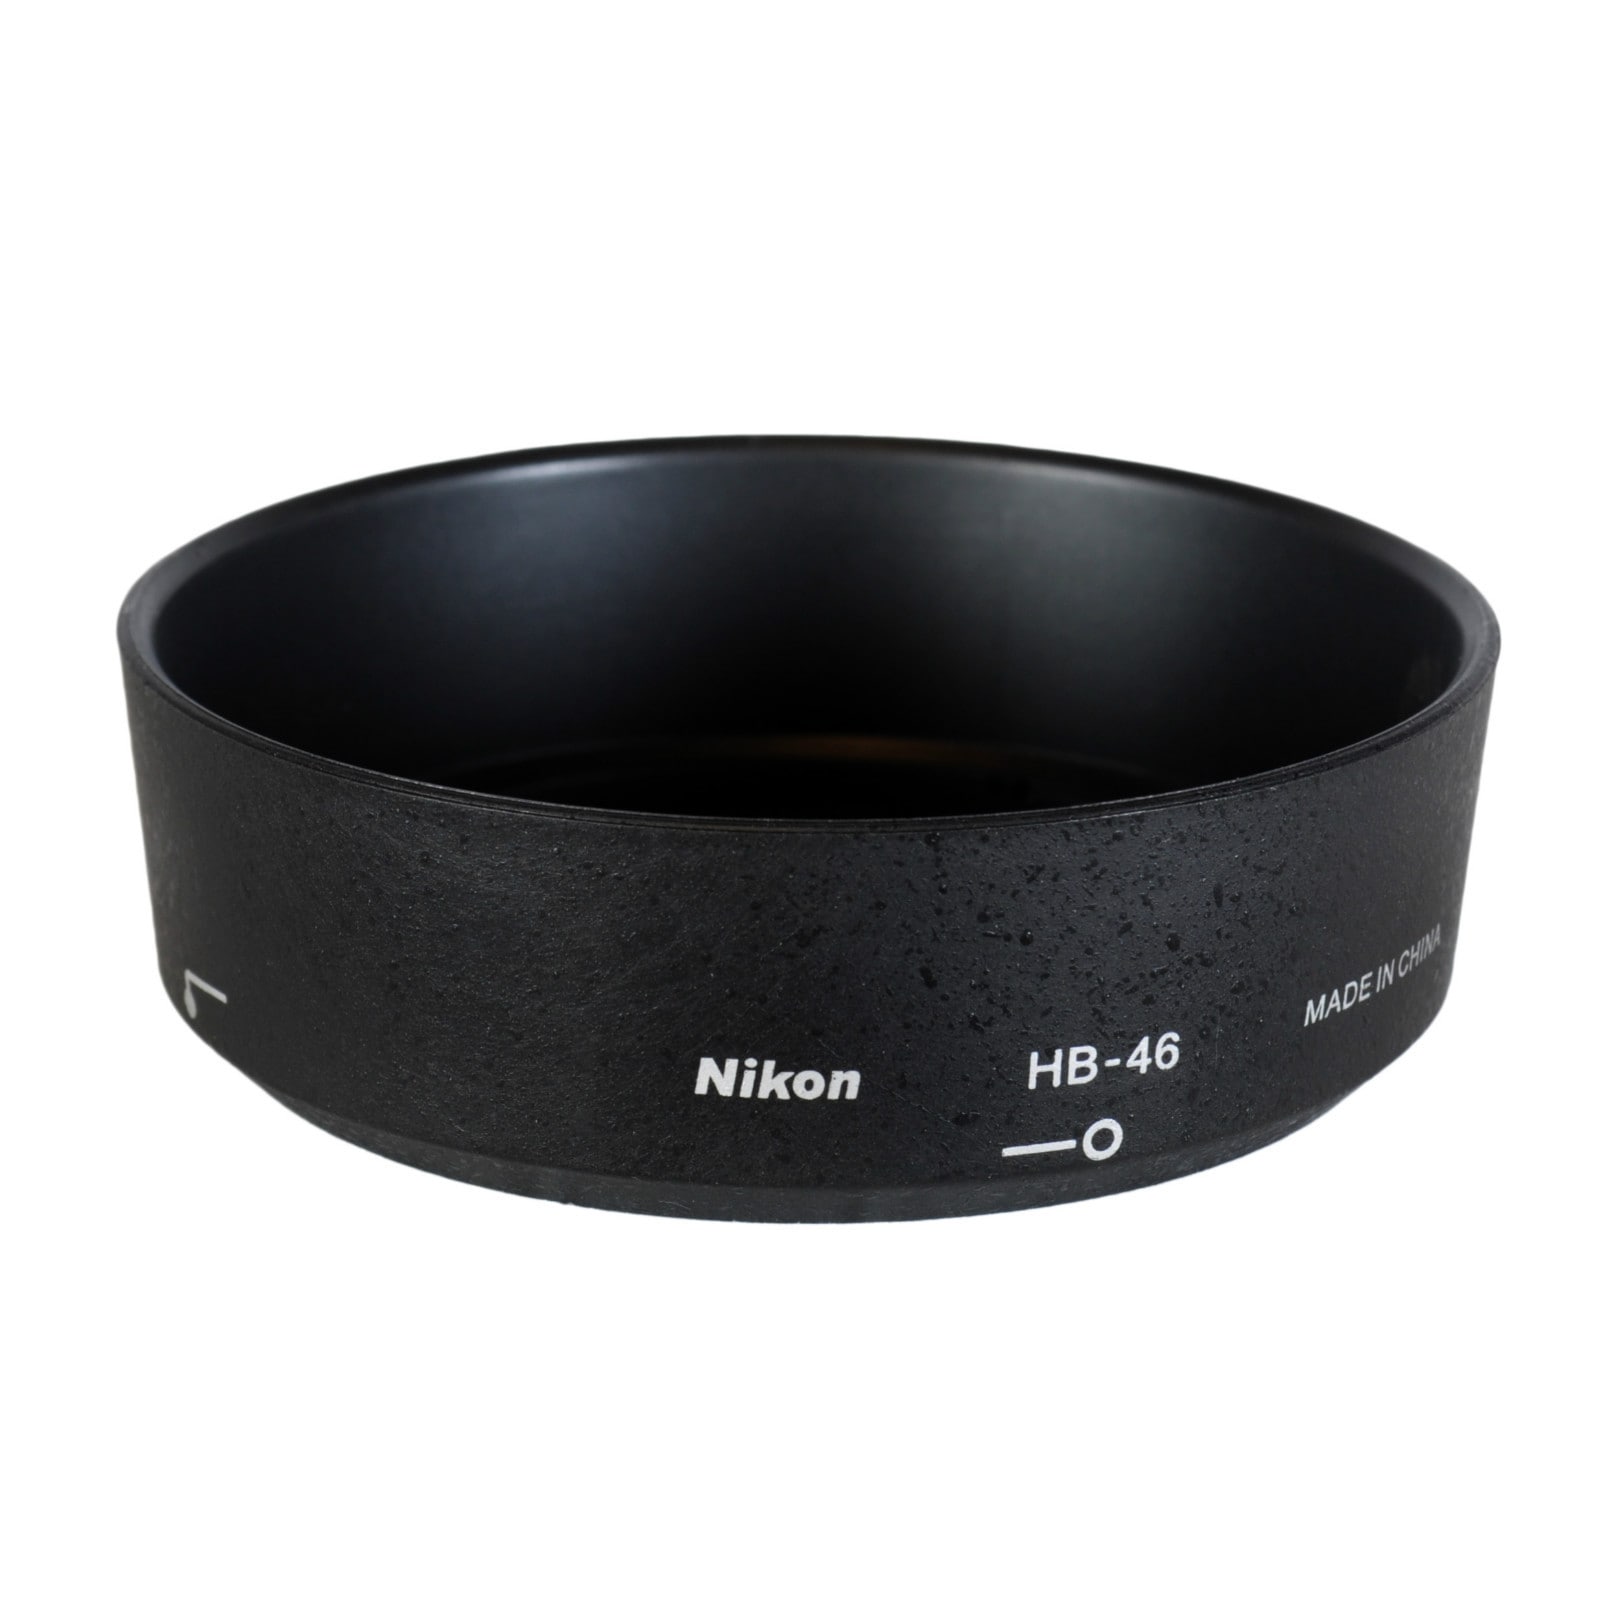 Nikon Hb-46